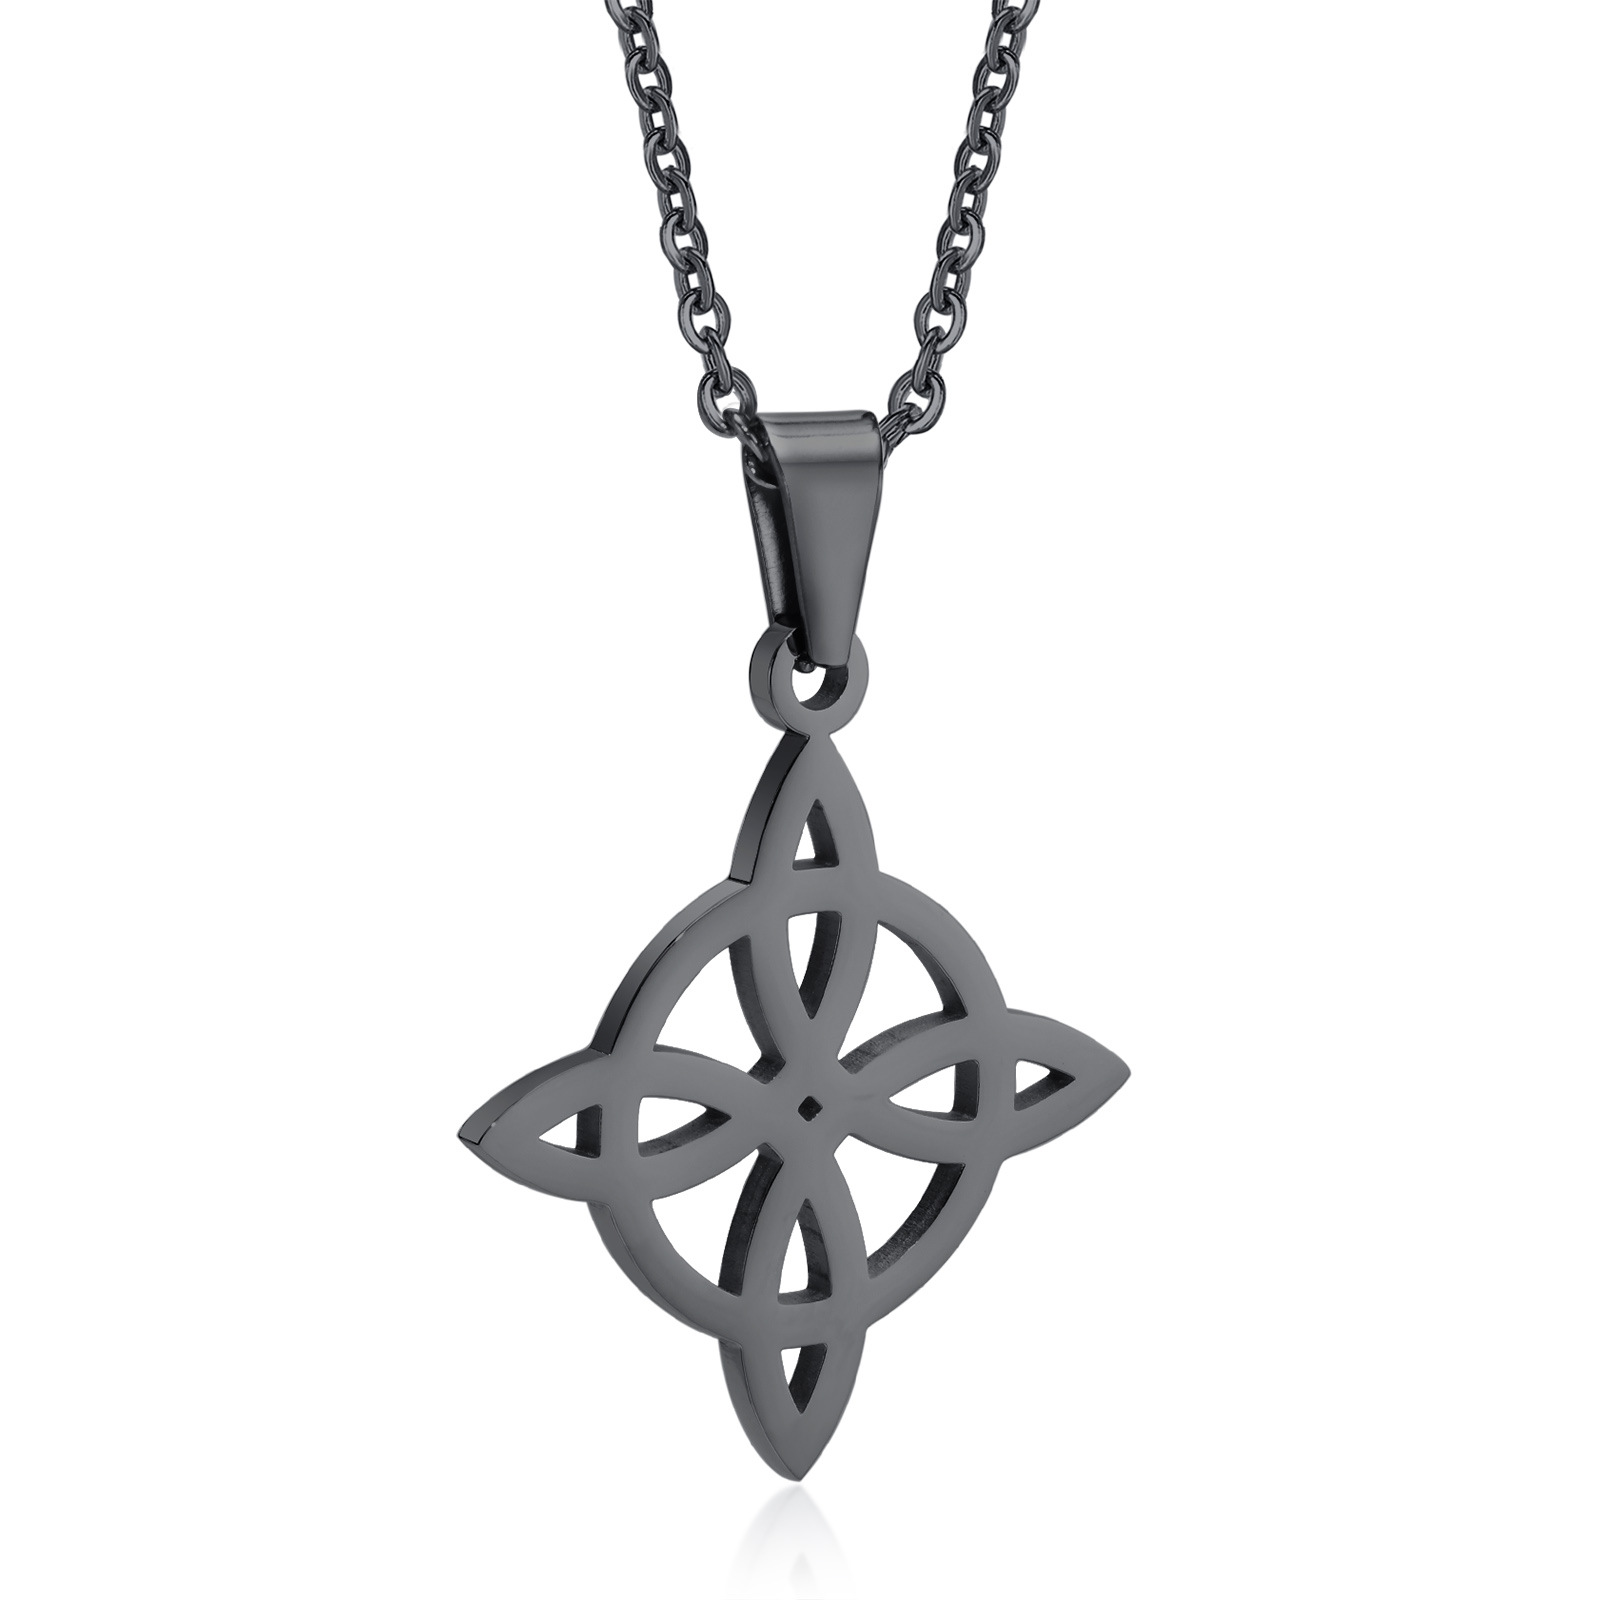 2:Black pendant   chain